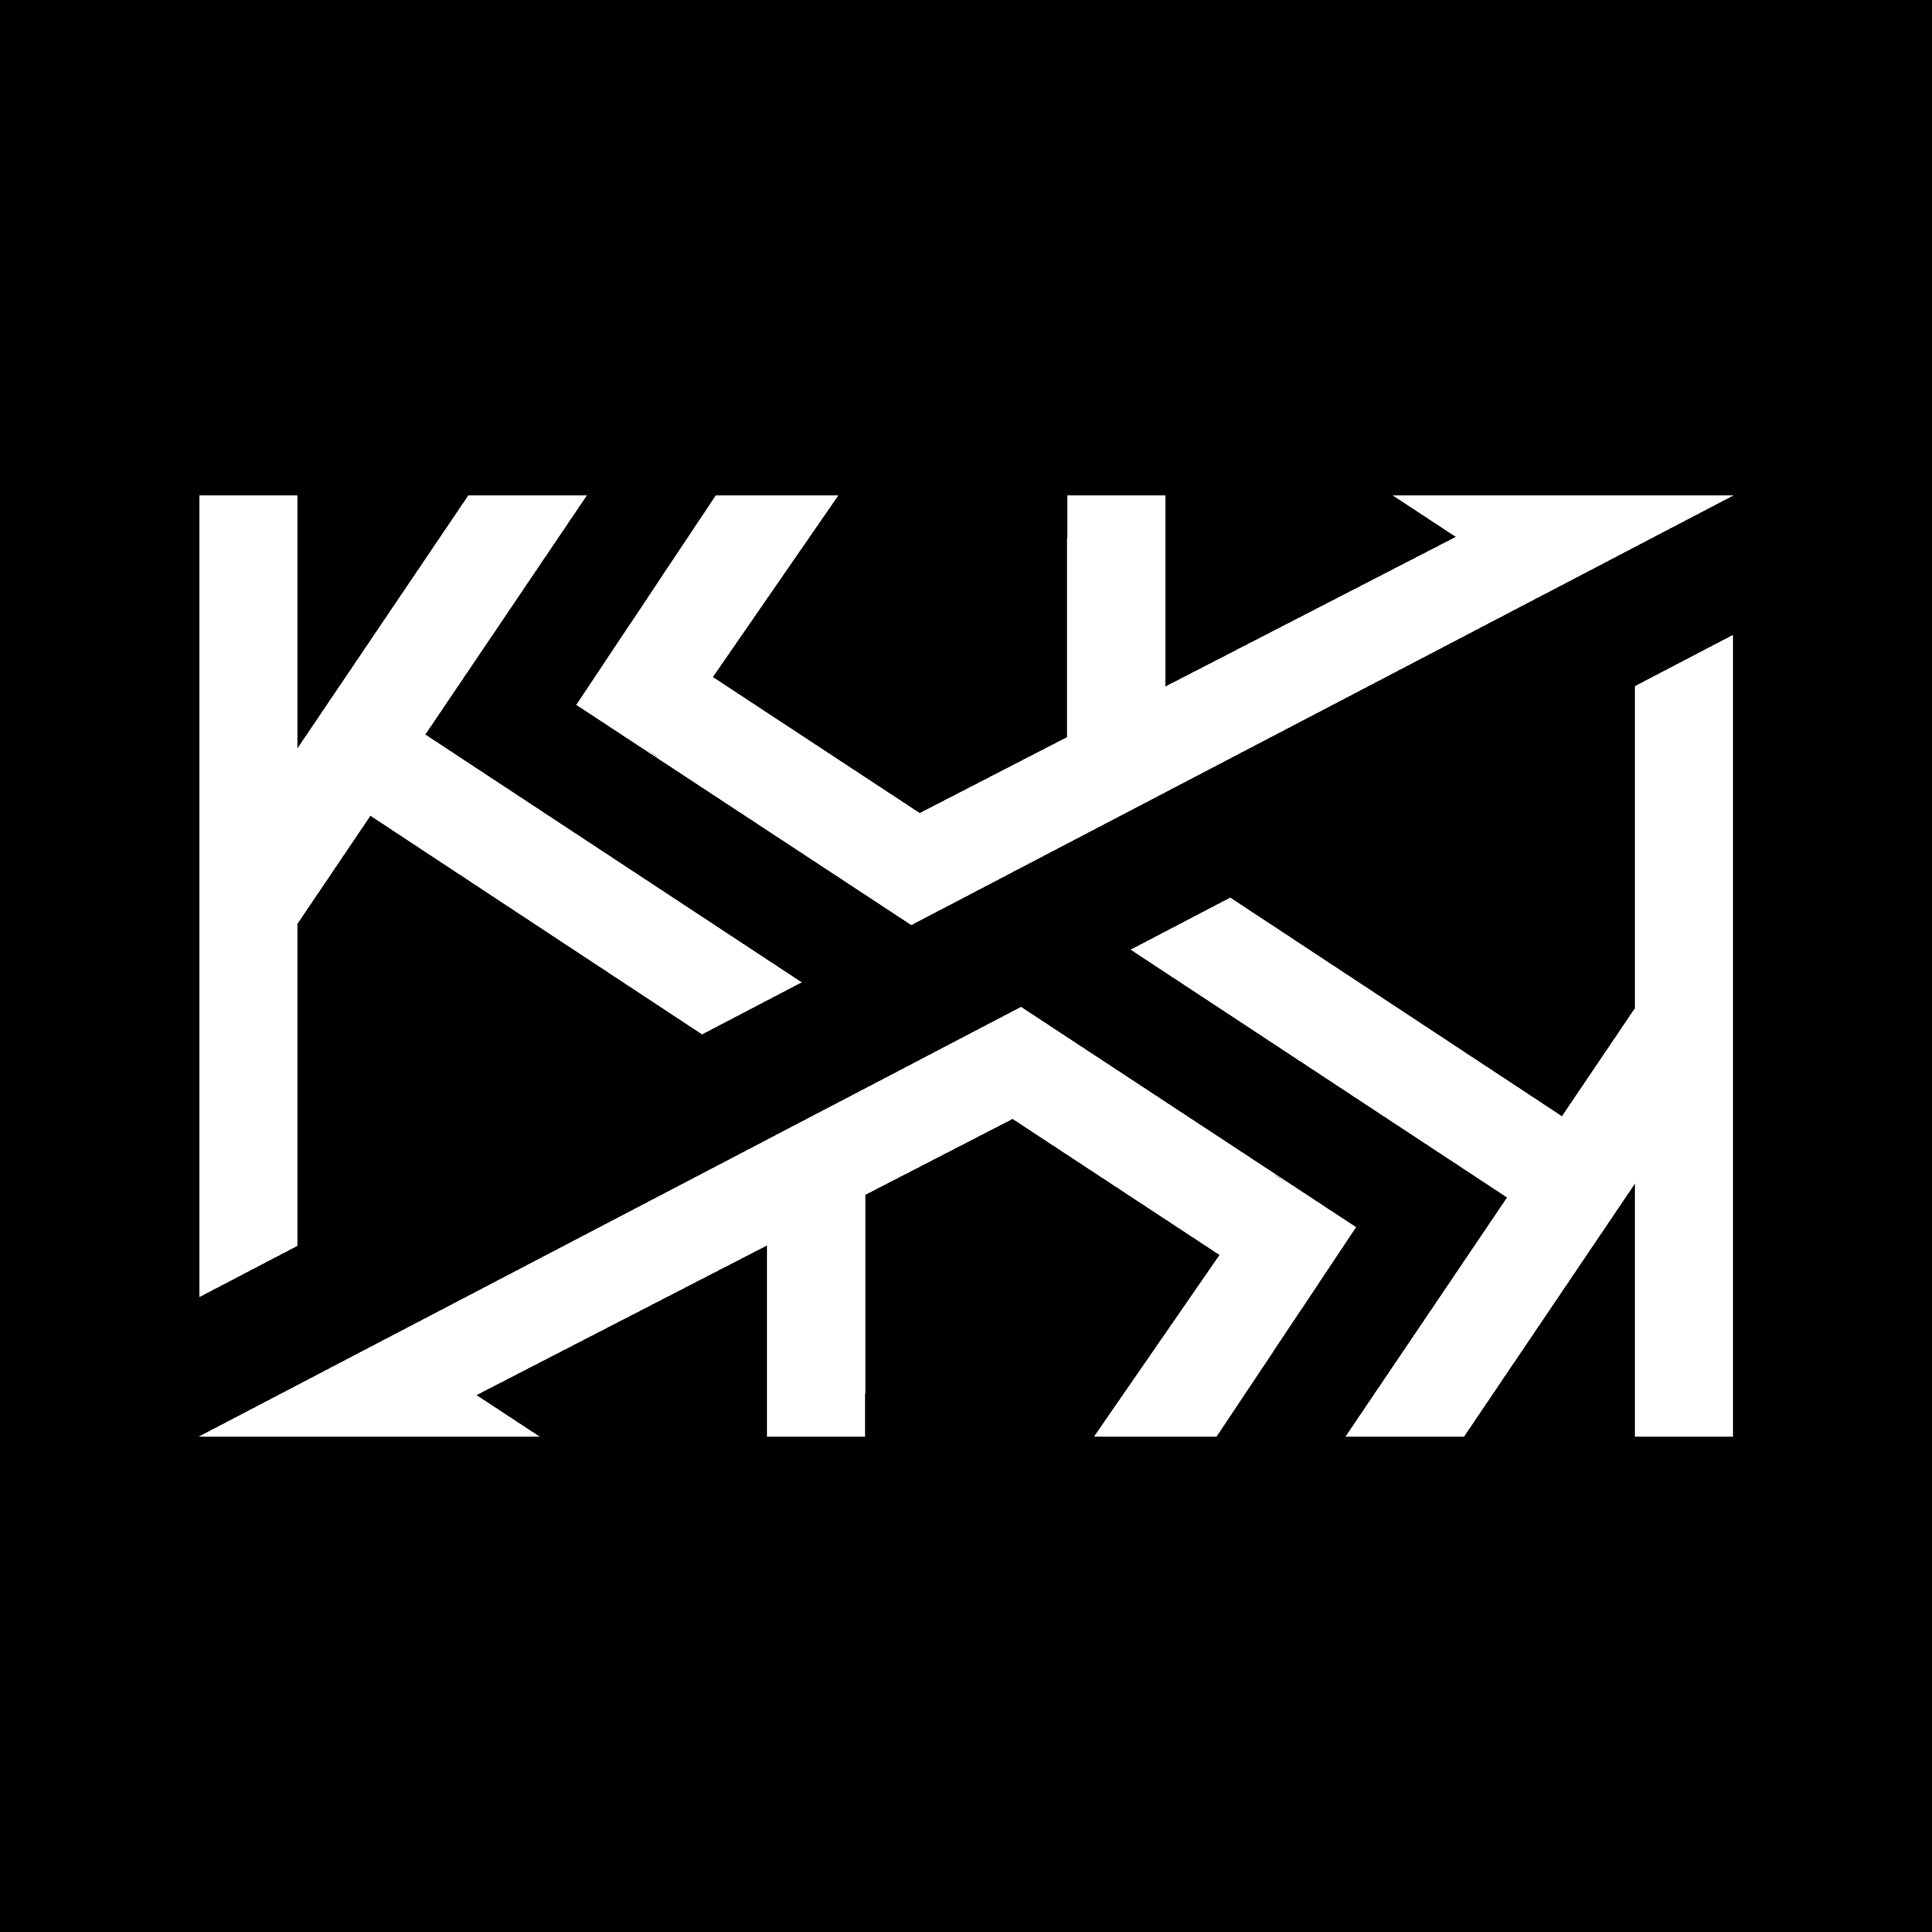 Kanye Logo - i made a Kanye logo design, tell me your thoughts.. « Kanye West Forum